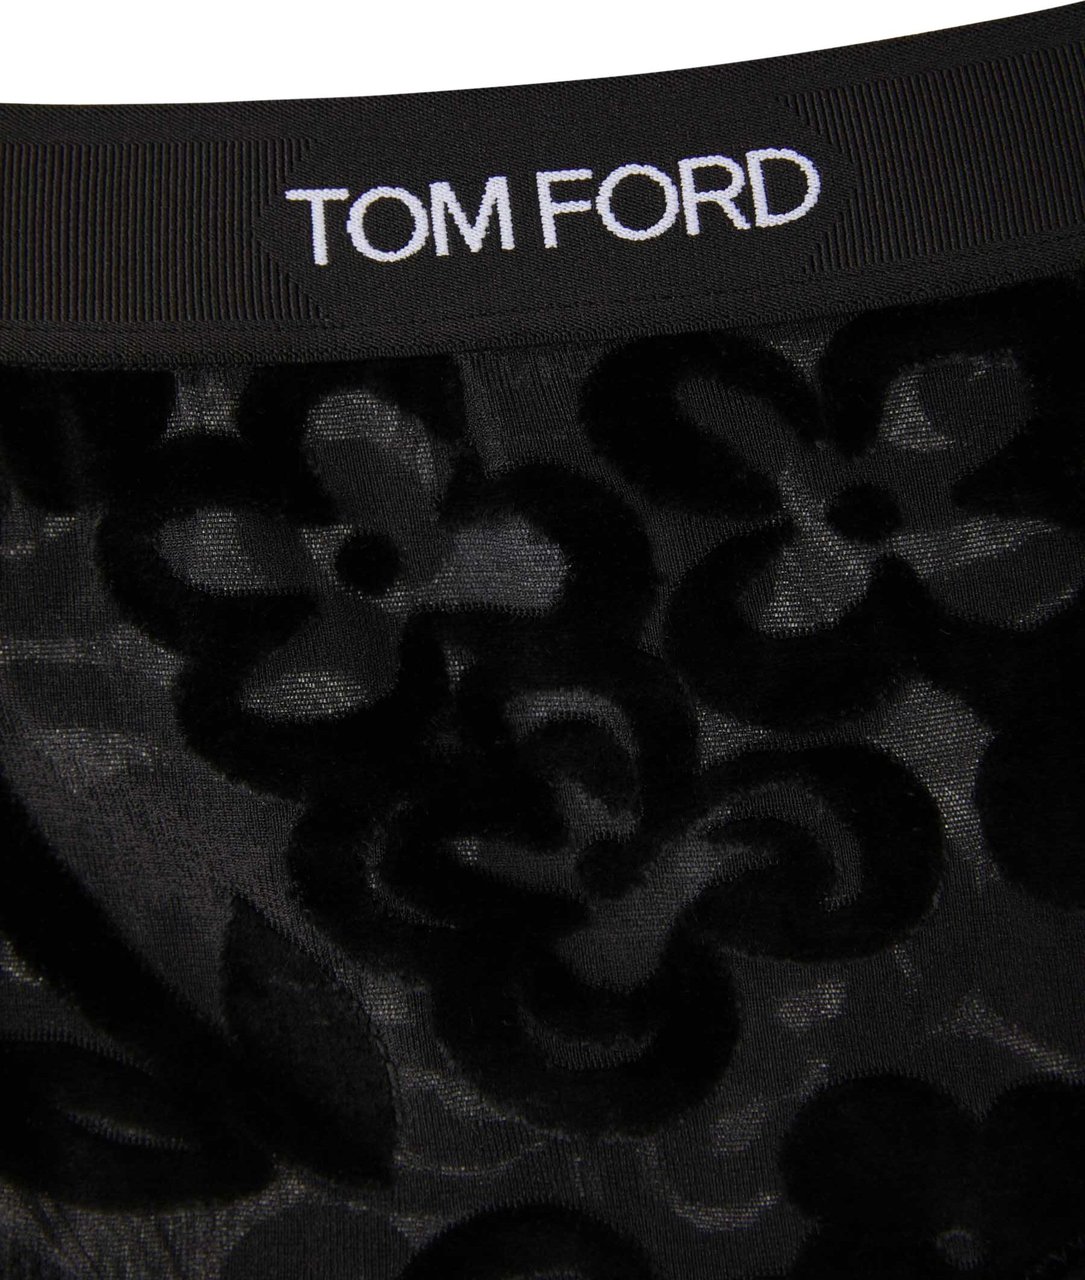 Tom Ford Floral Tulle Briefs Zwart